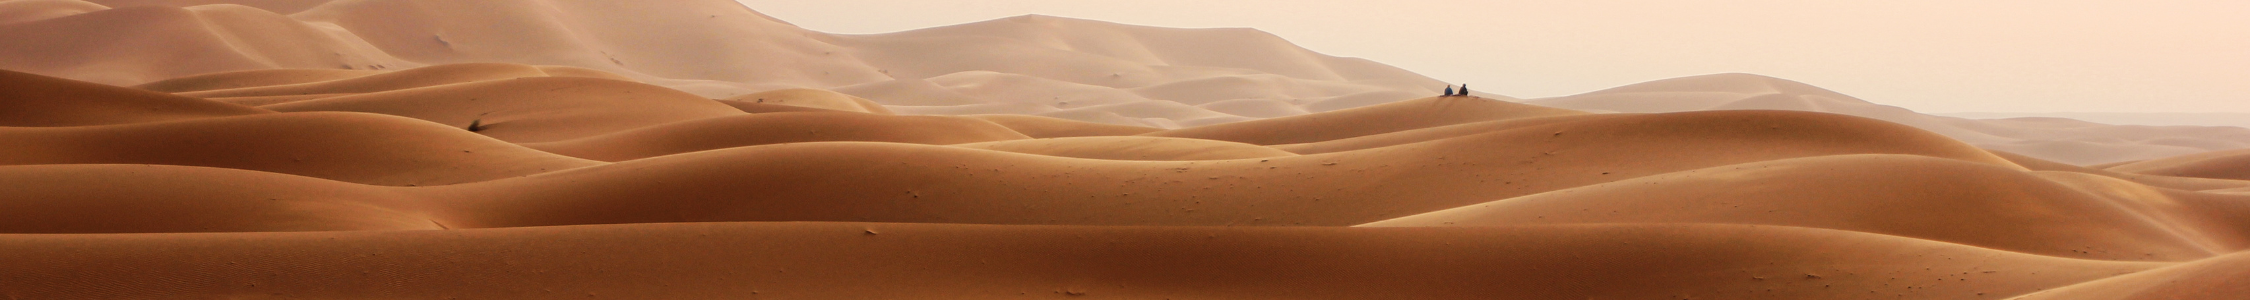 Panorama foto uitgestrekte woestijn